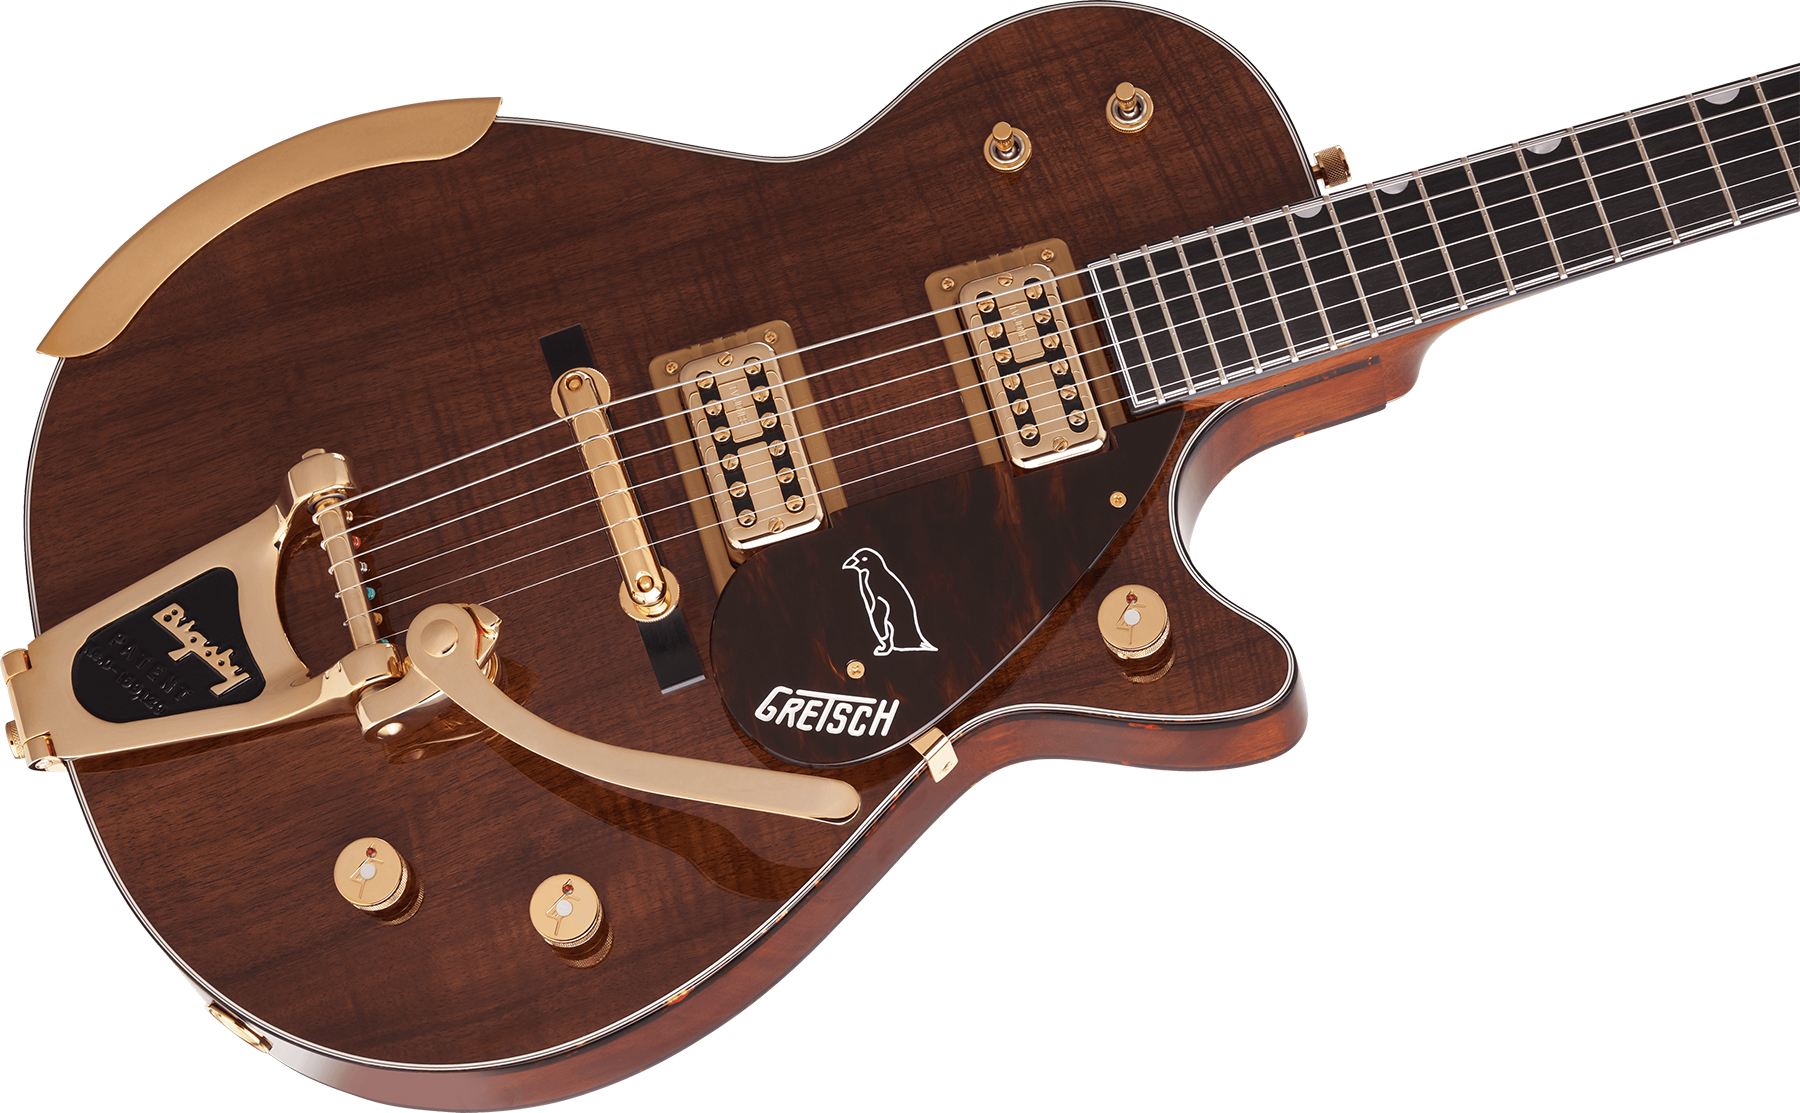 Gretsch G6134t-ltd Penguin Koa Bigsby Pro Jap 2h Trem Eb - Natural - Single cut electric guitar - Variation 2